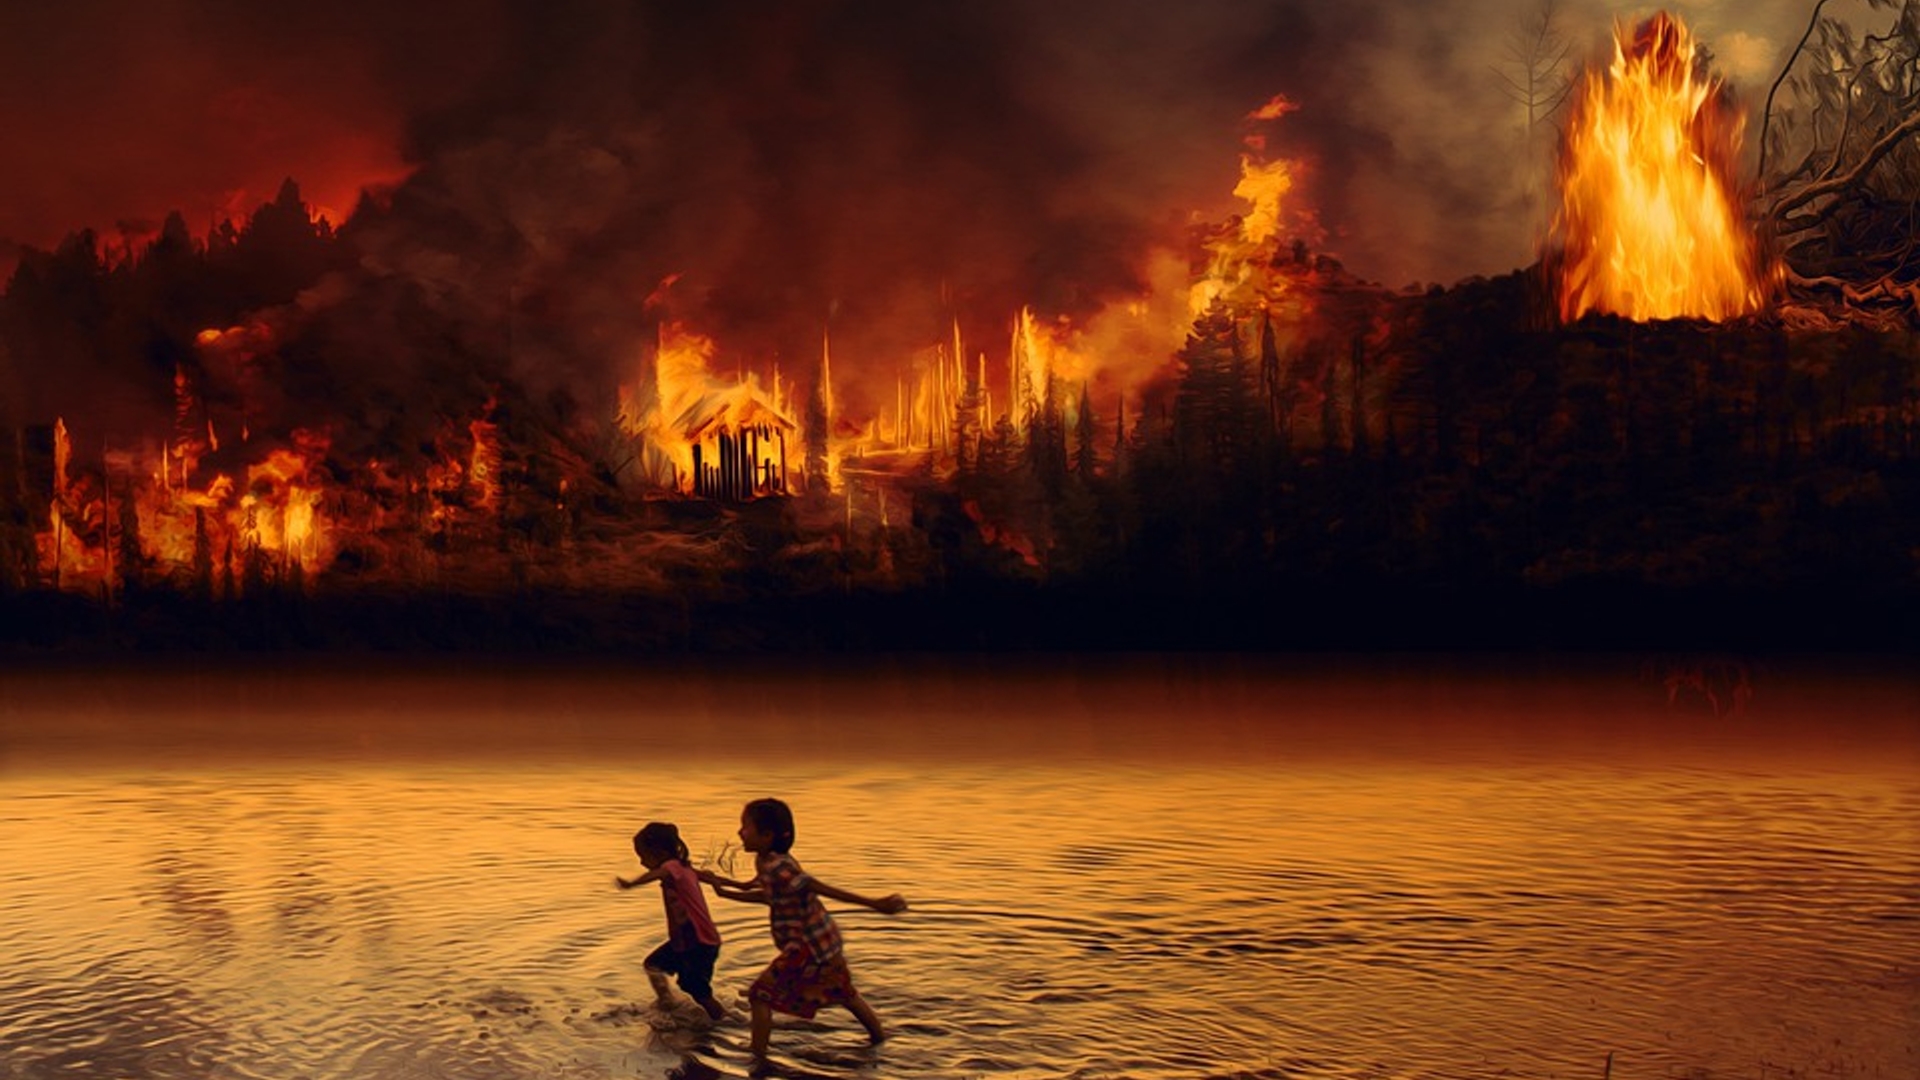 Forest Fire Fear Fire Children Amazon Flame